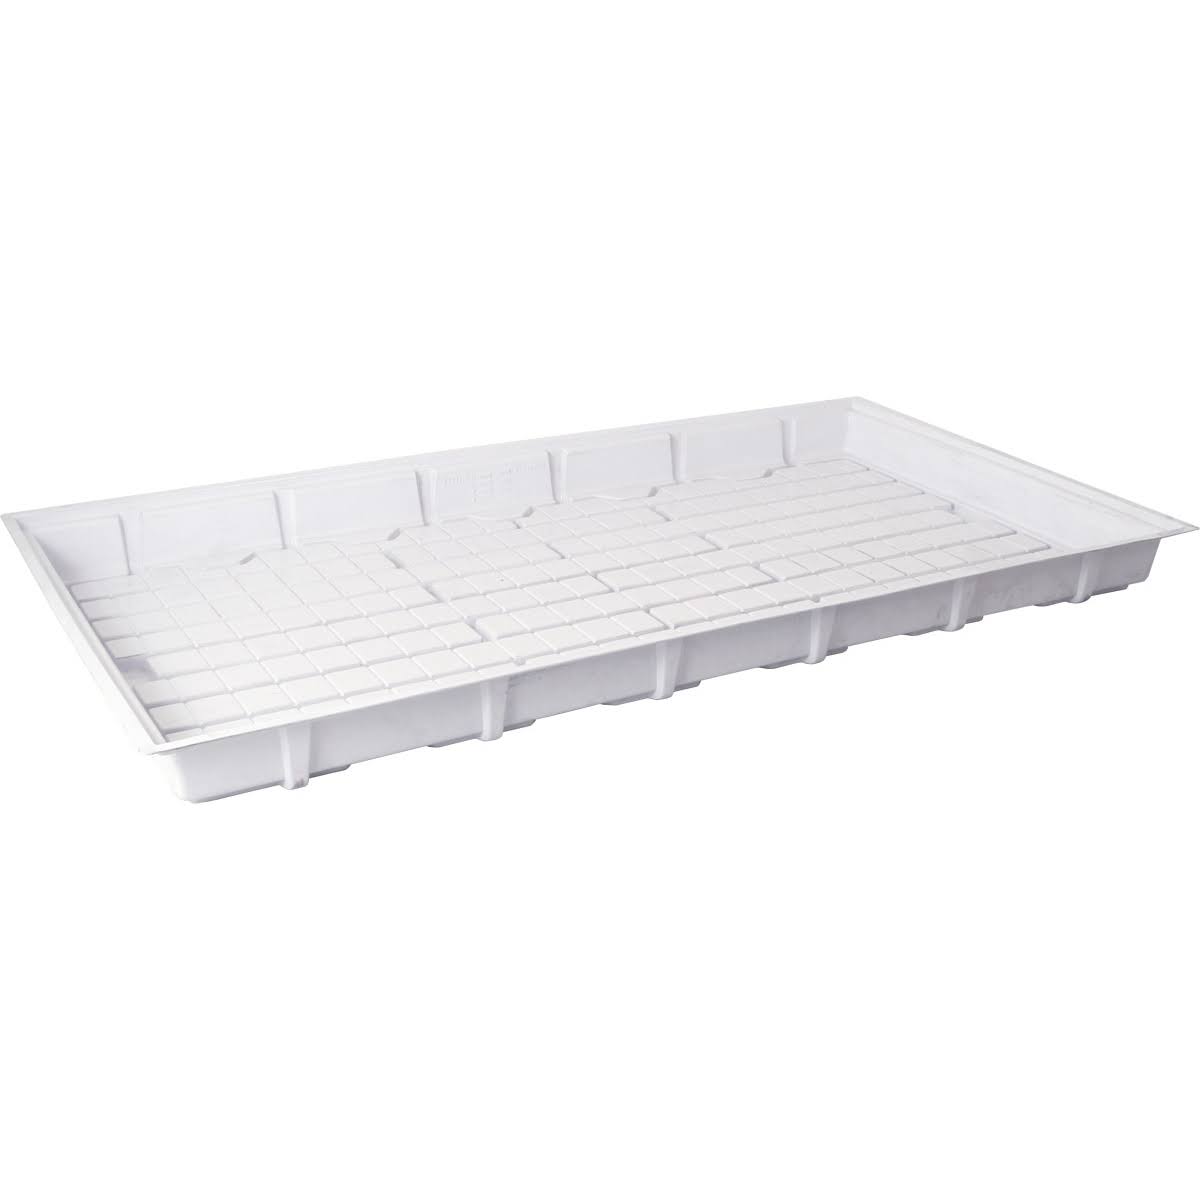 Hydrofarm Flood Table - White, 8' x 4'